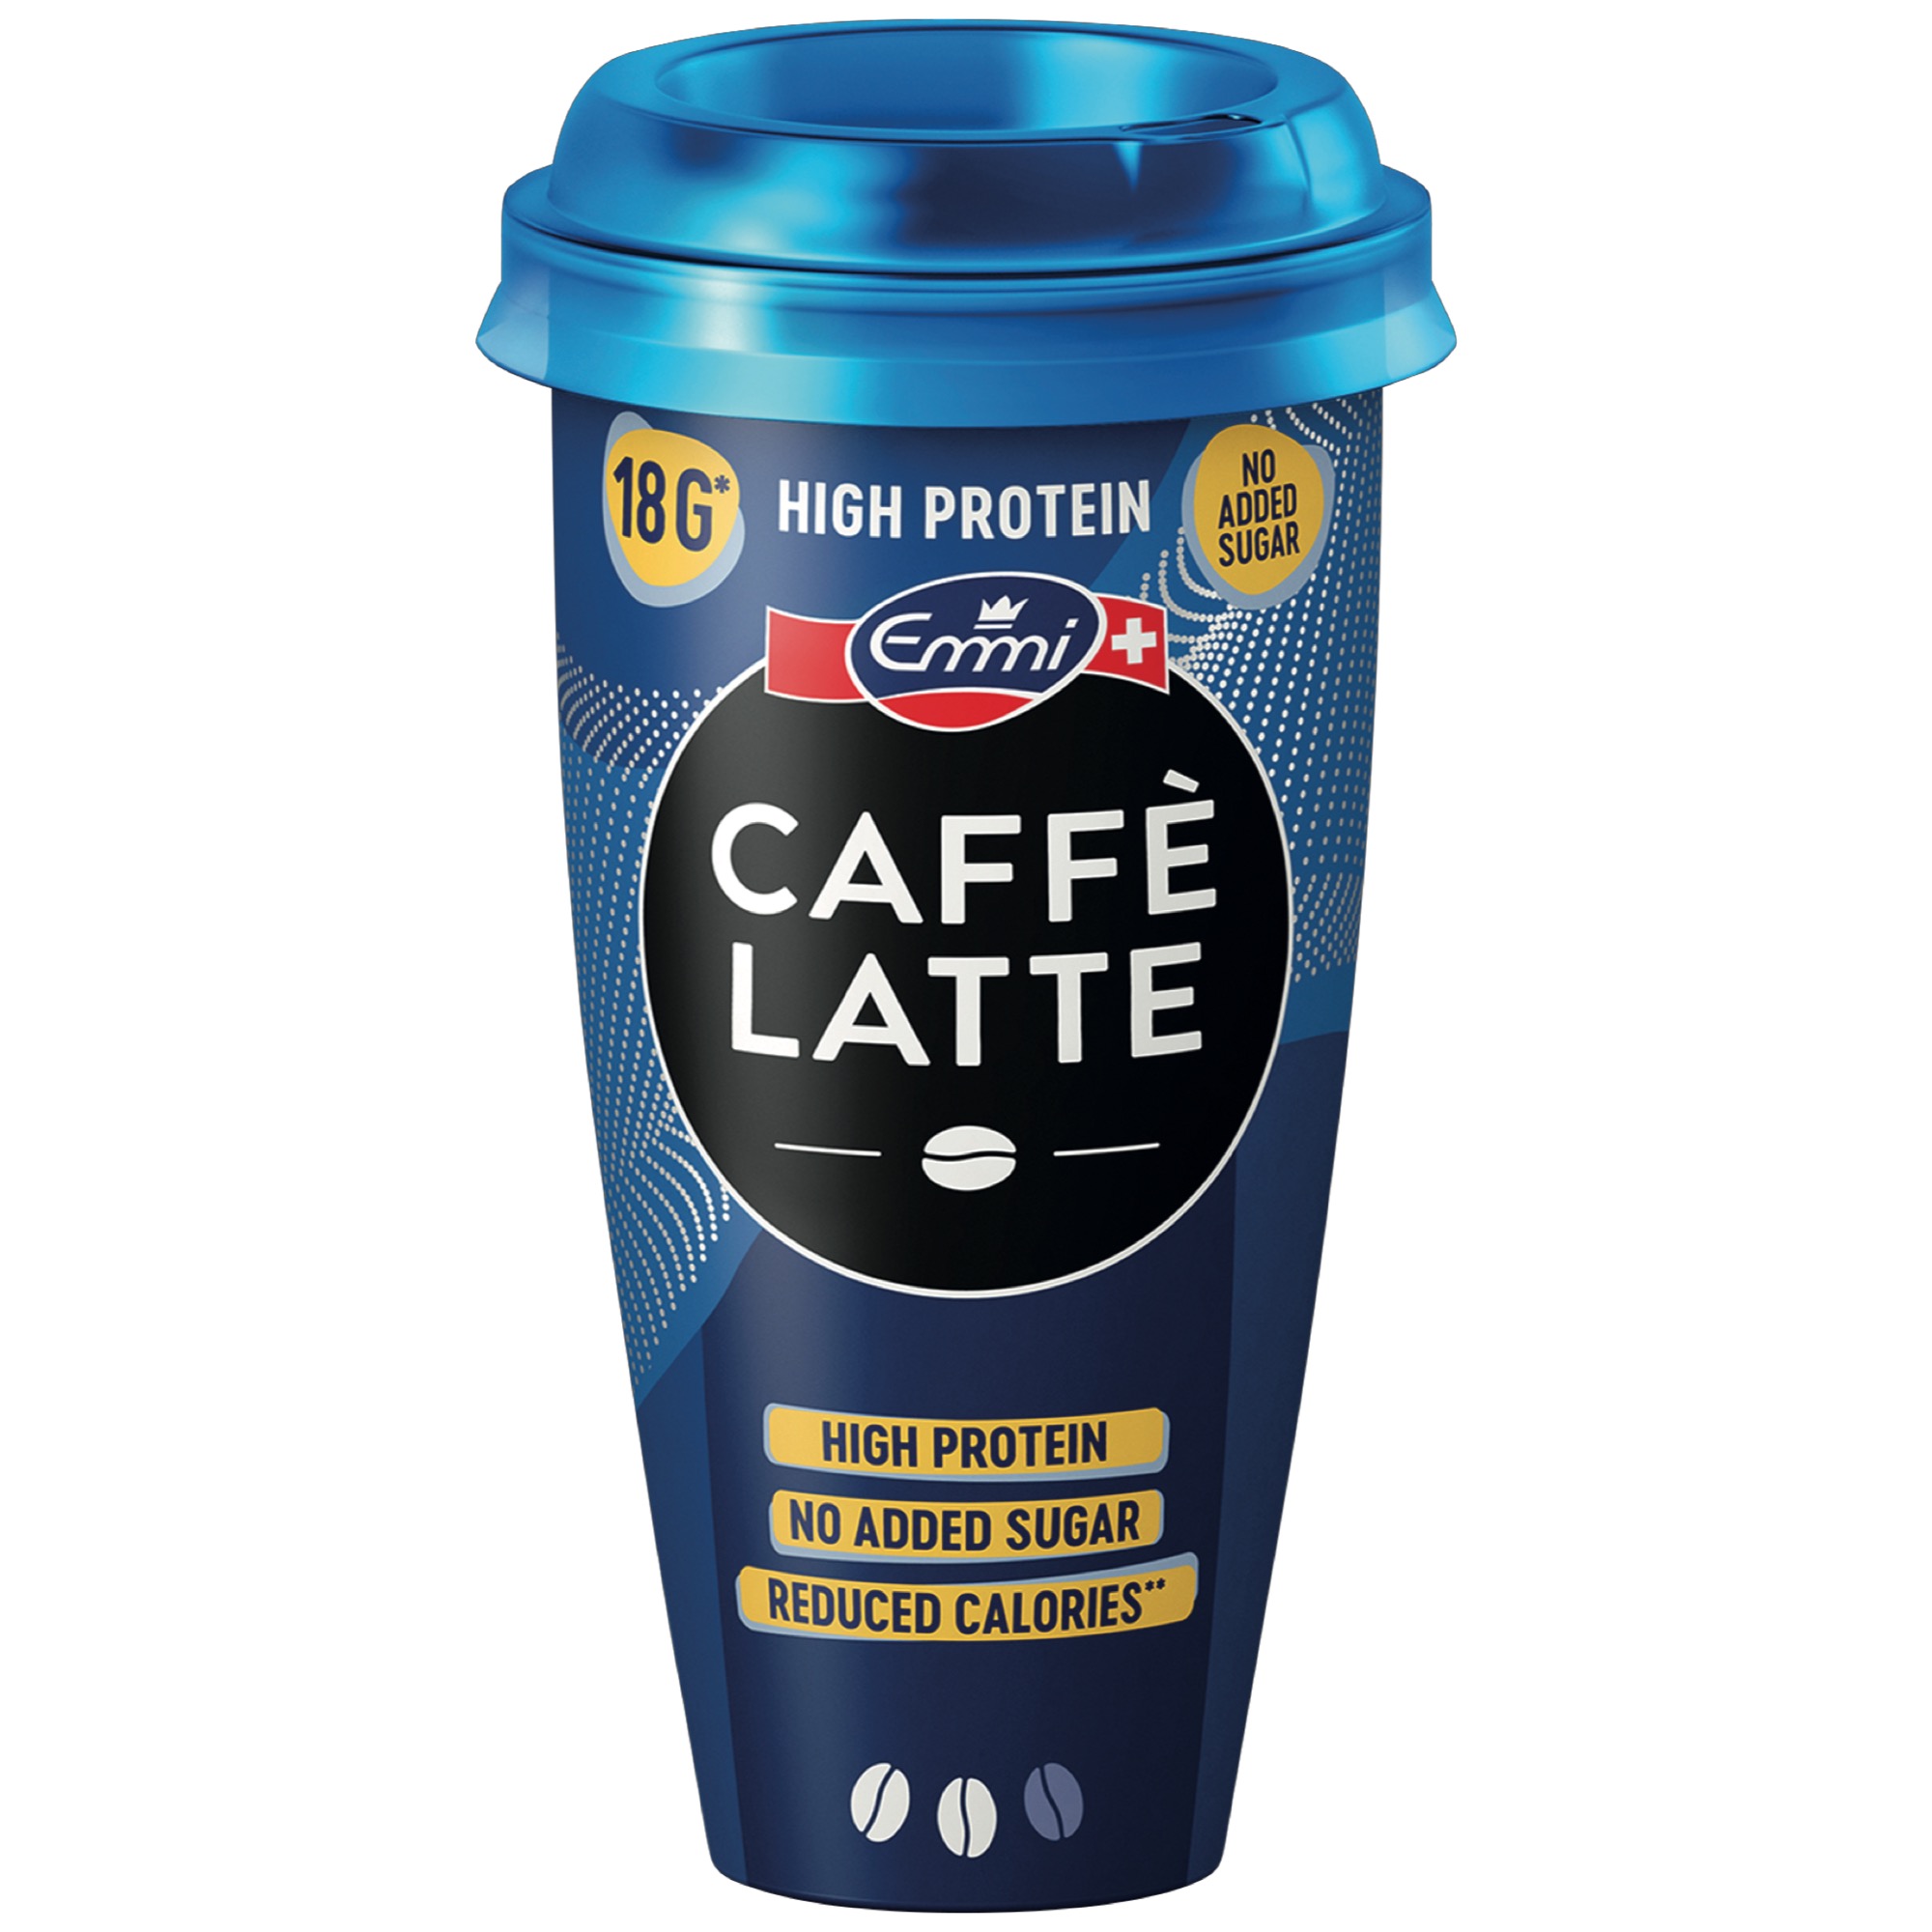 Emmi Caffe Latte 230ml, High Protein